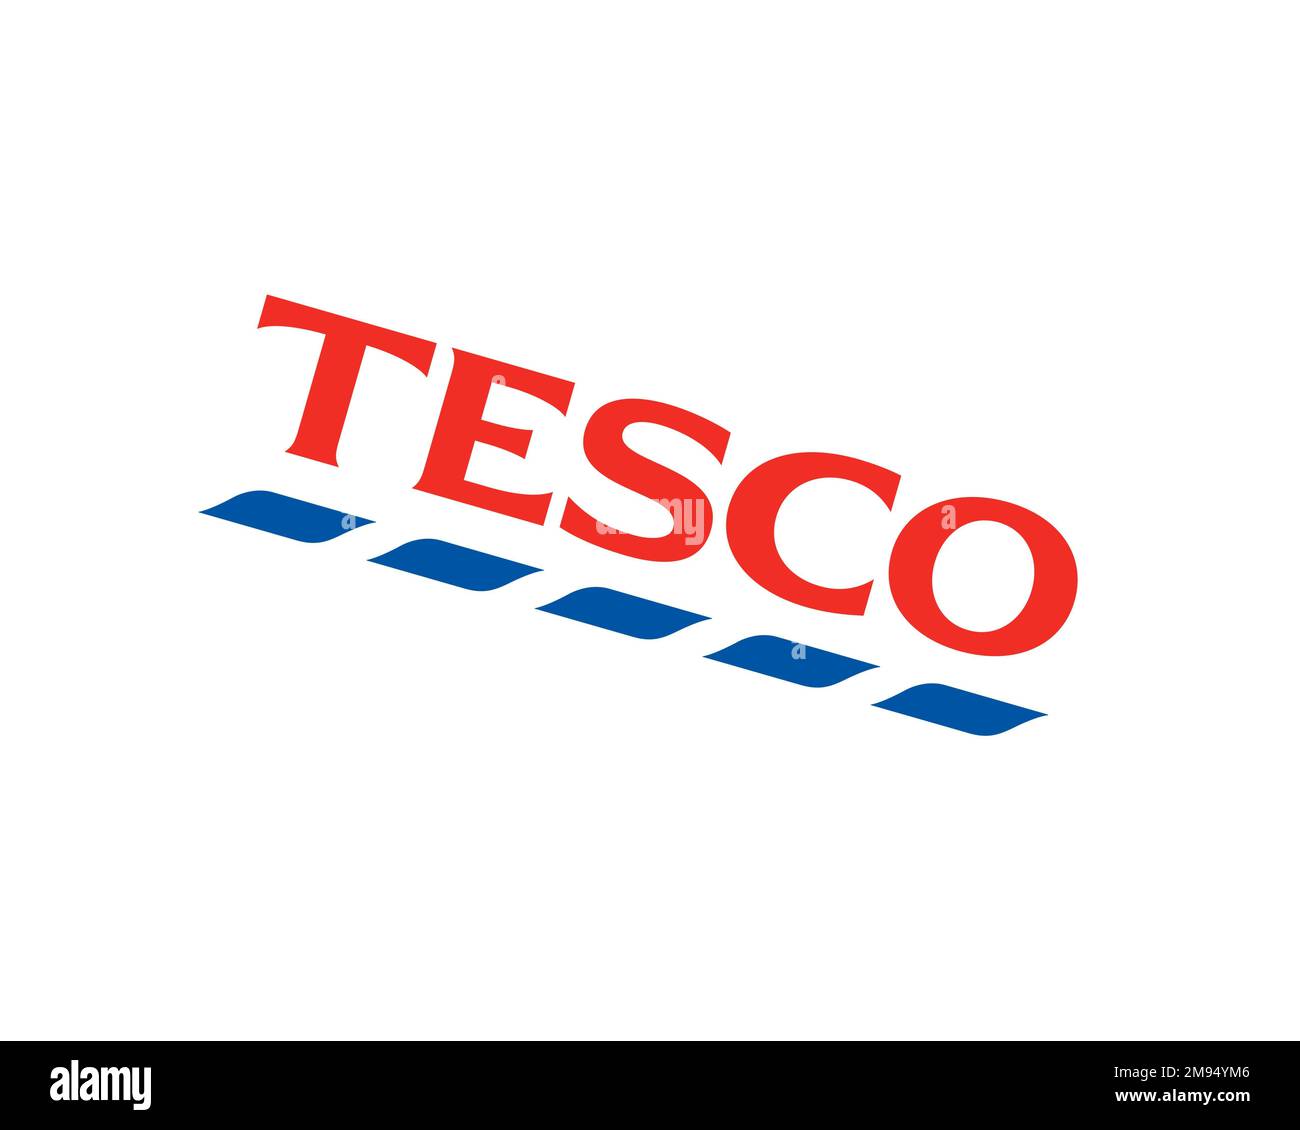 Tesco, rotated logo, white background B Stock Photo